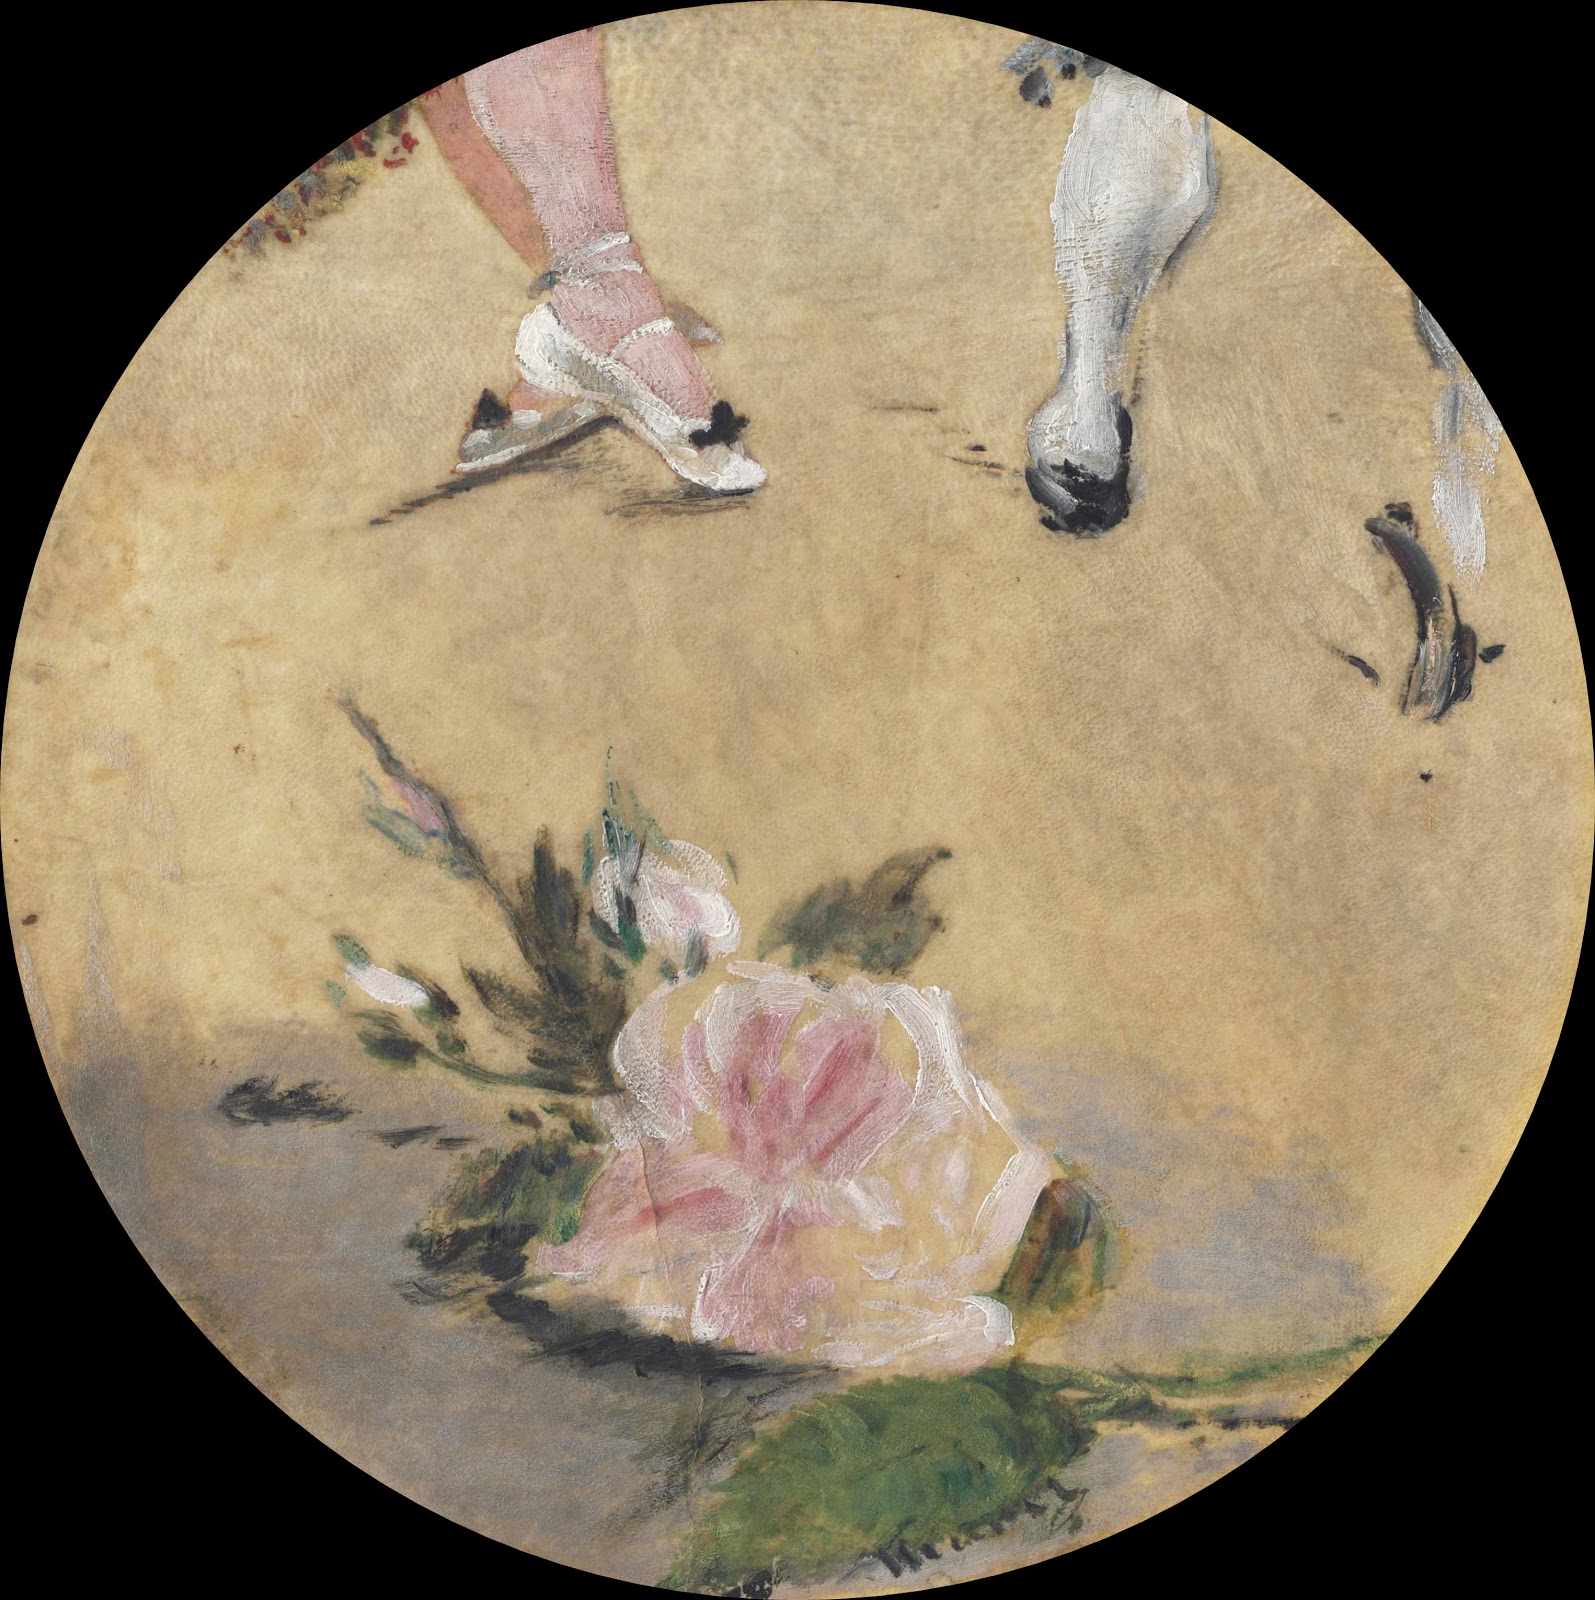 Edouard+Manet-1832-1883 (160).jpg